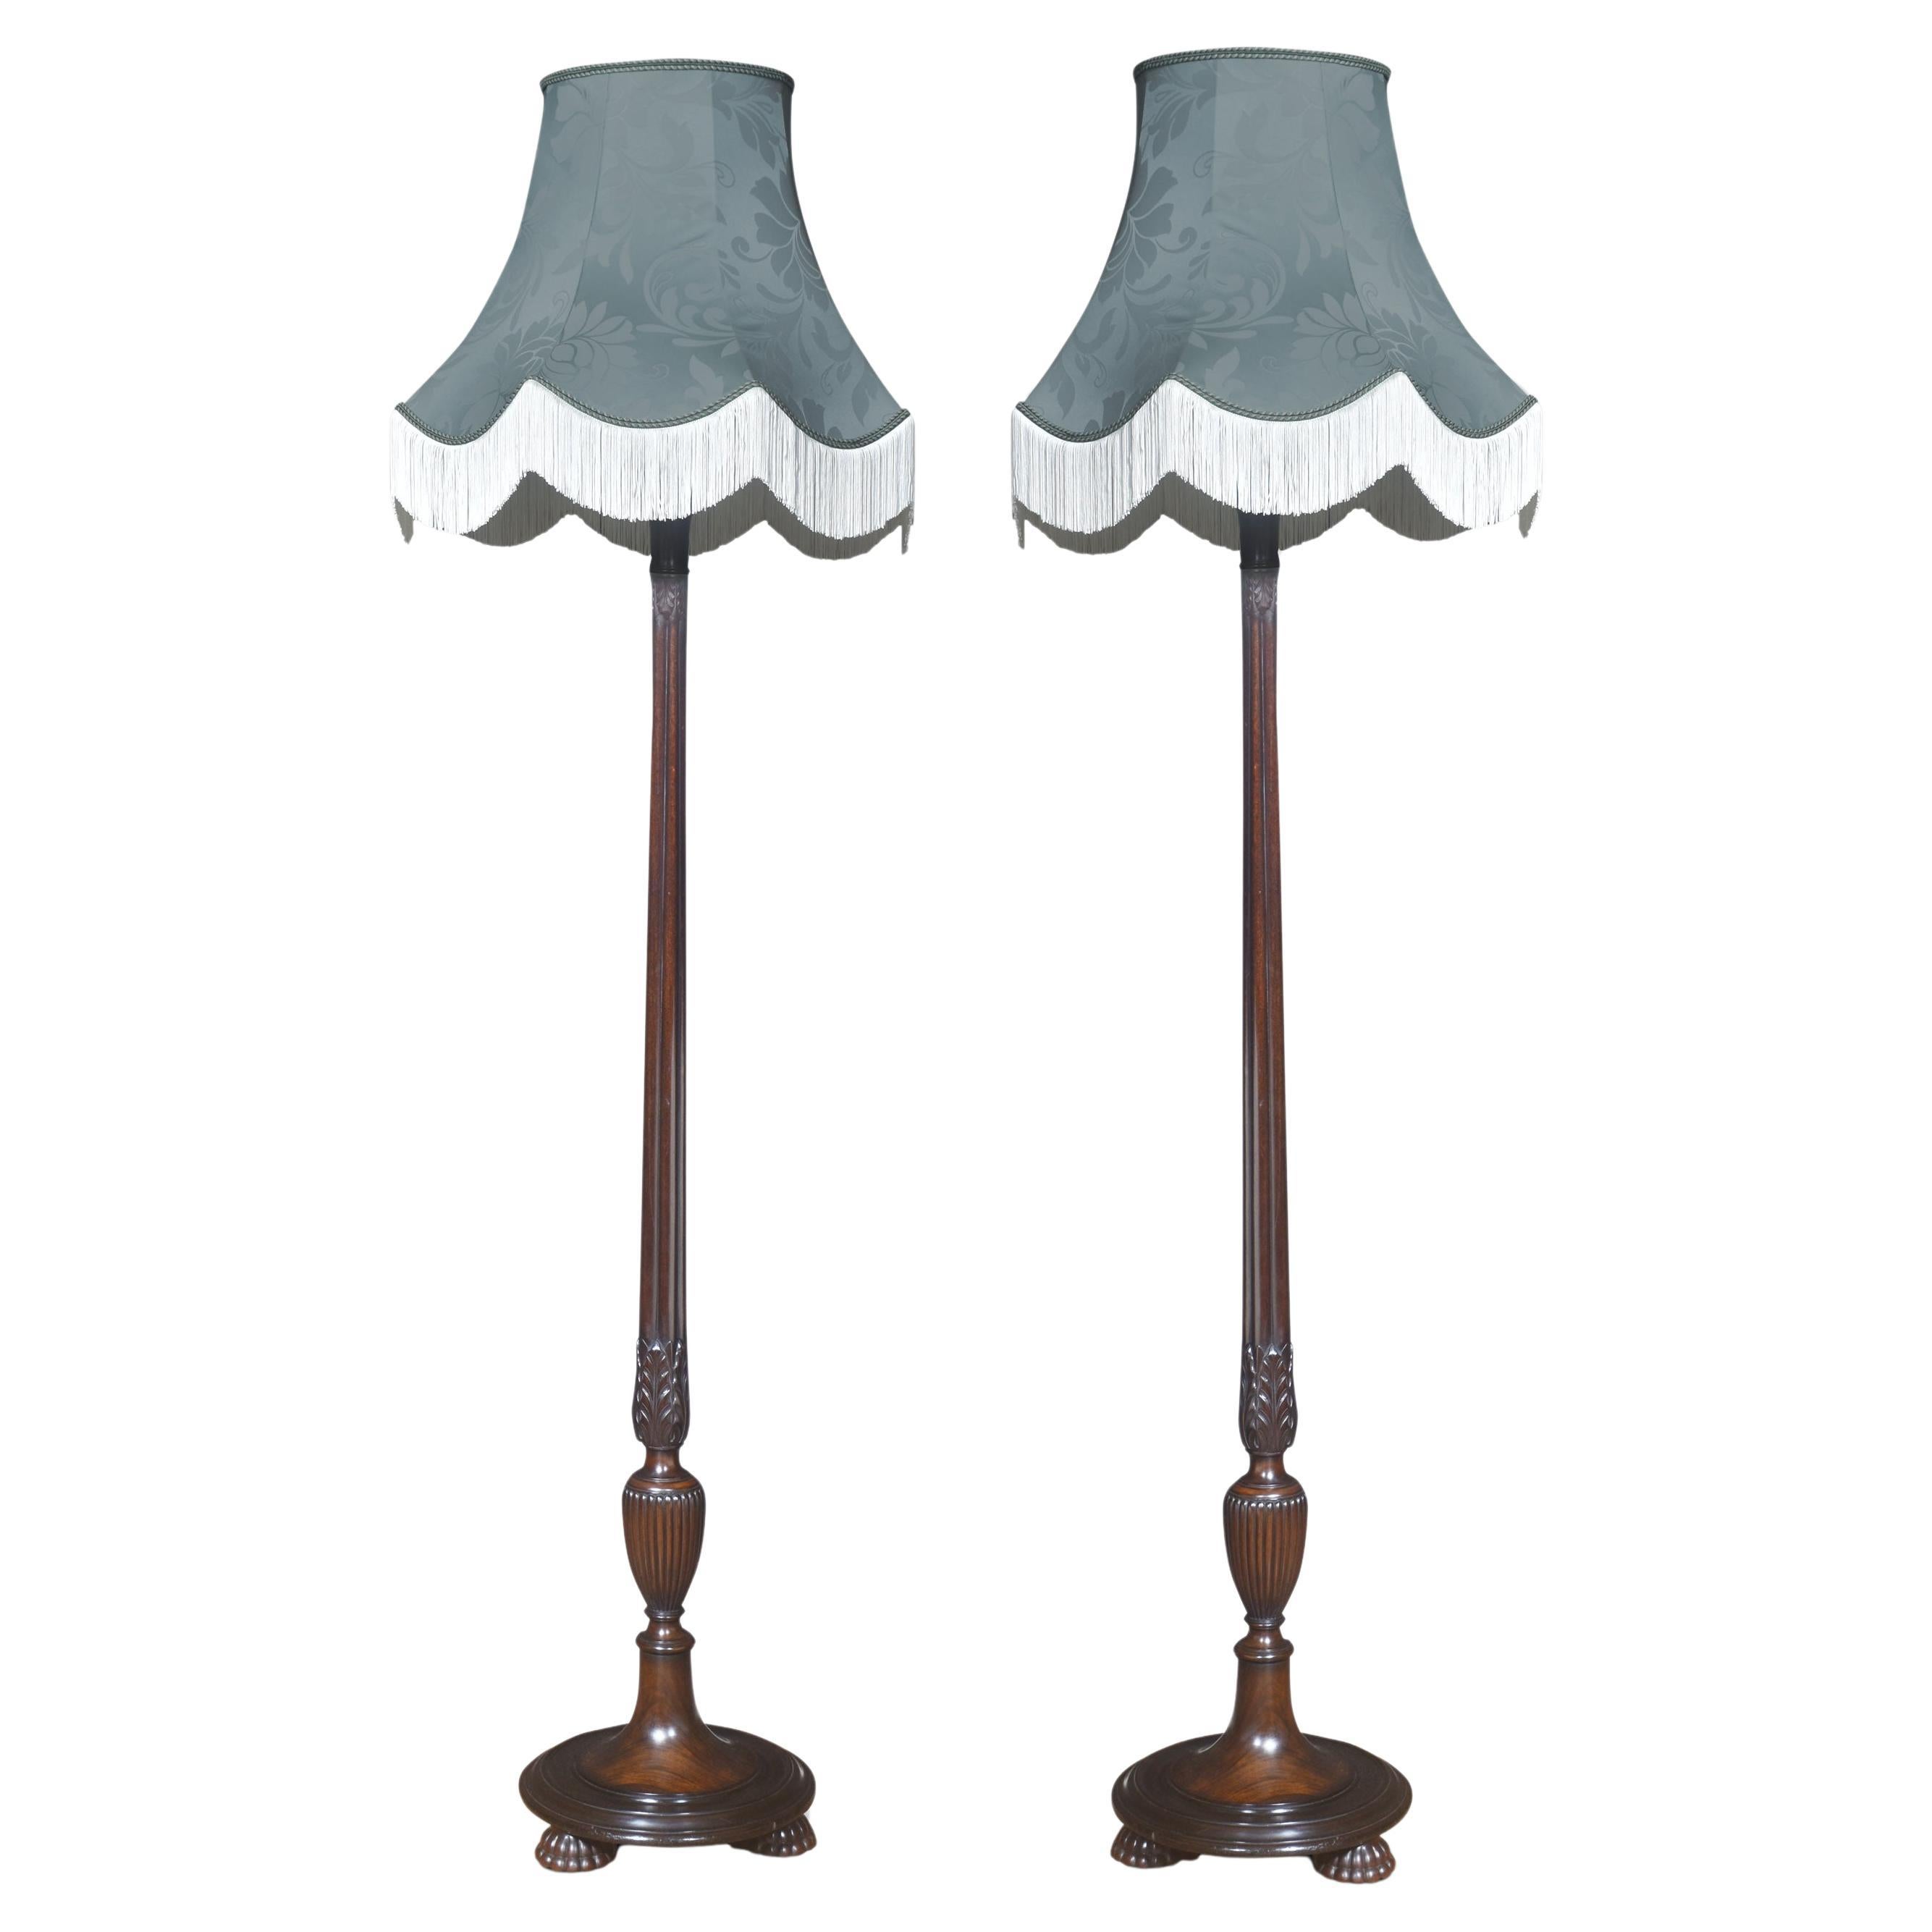 Near pair of standard lamps